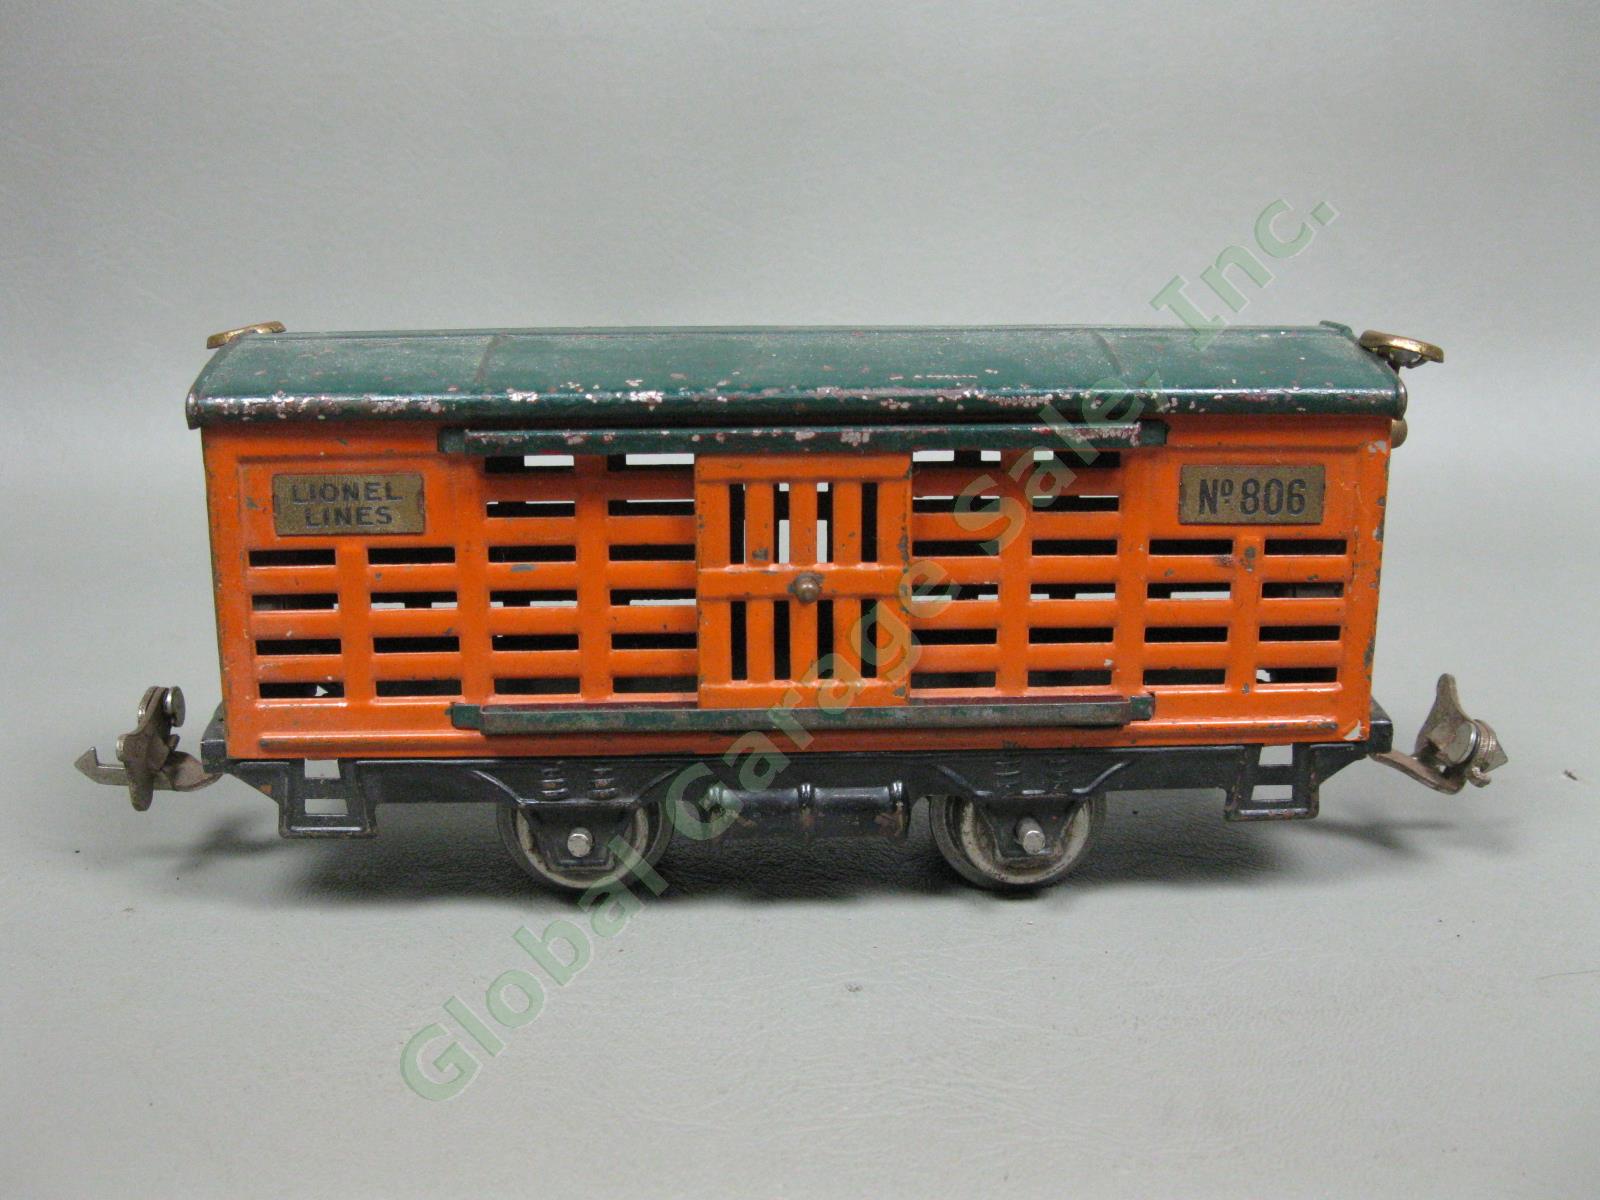 Antique 1920s-1930s Lionel Lines O Gauge Model Train Set #803 804 805 806 807 NR 16